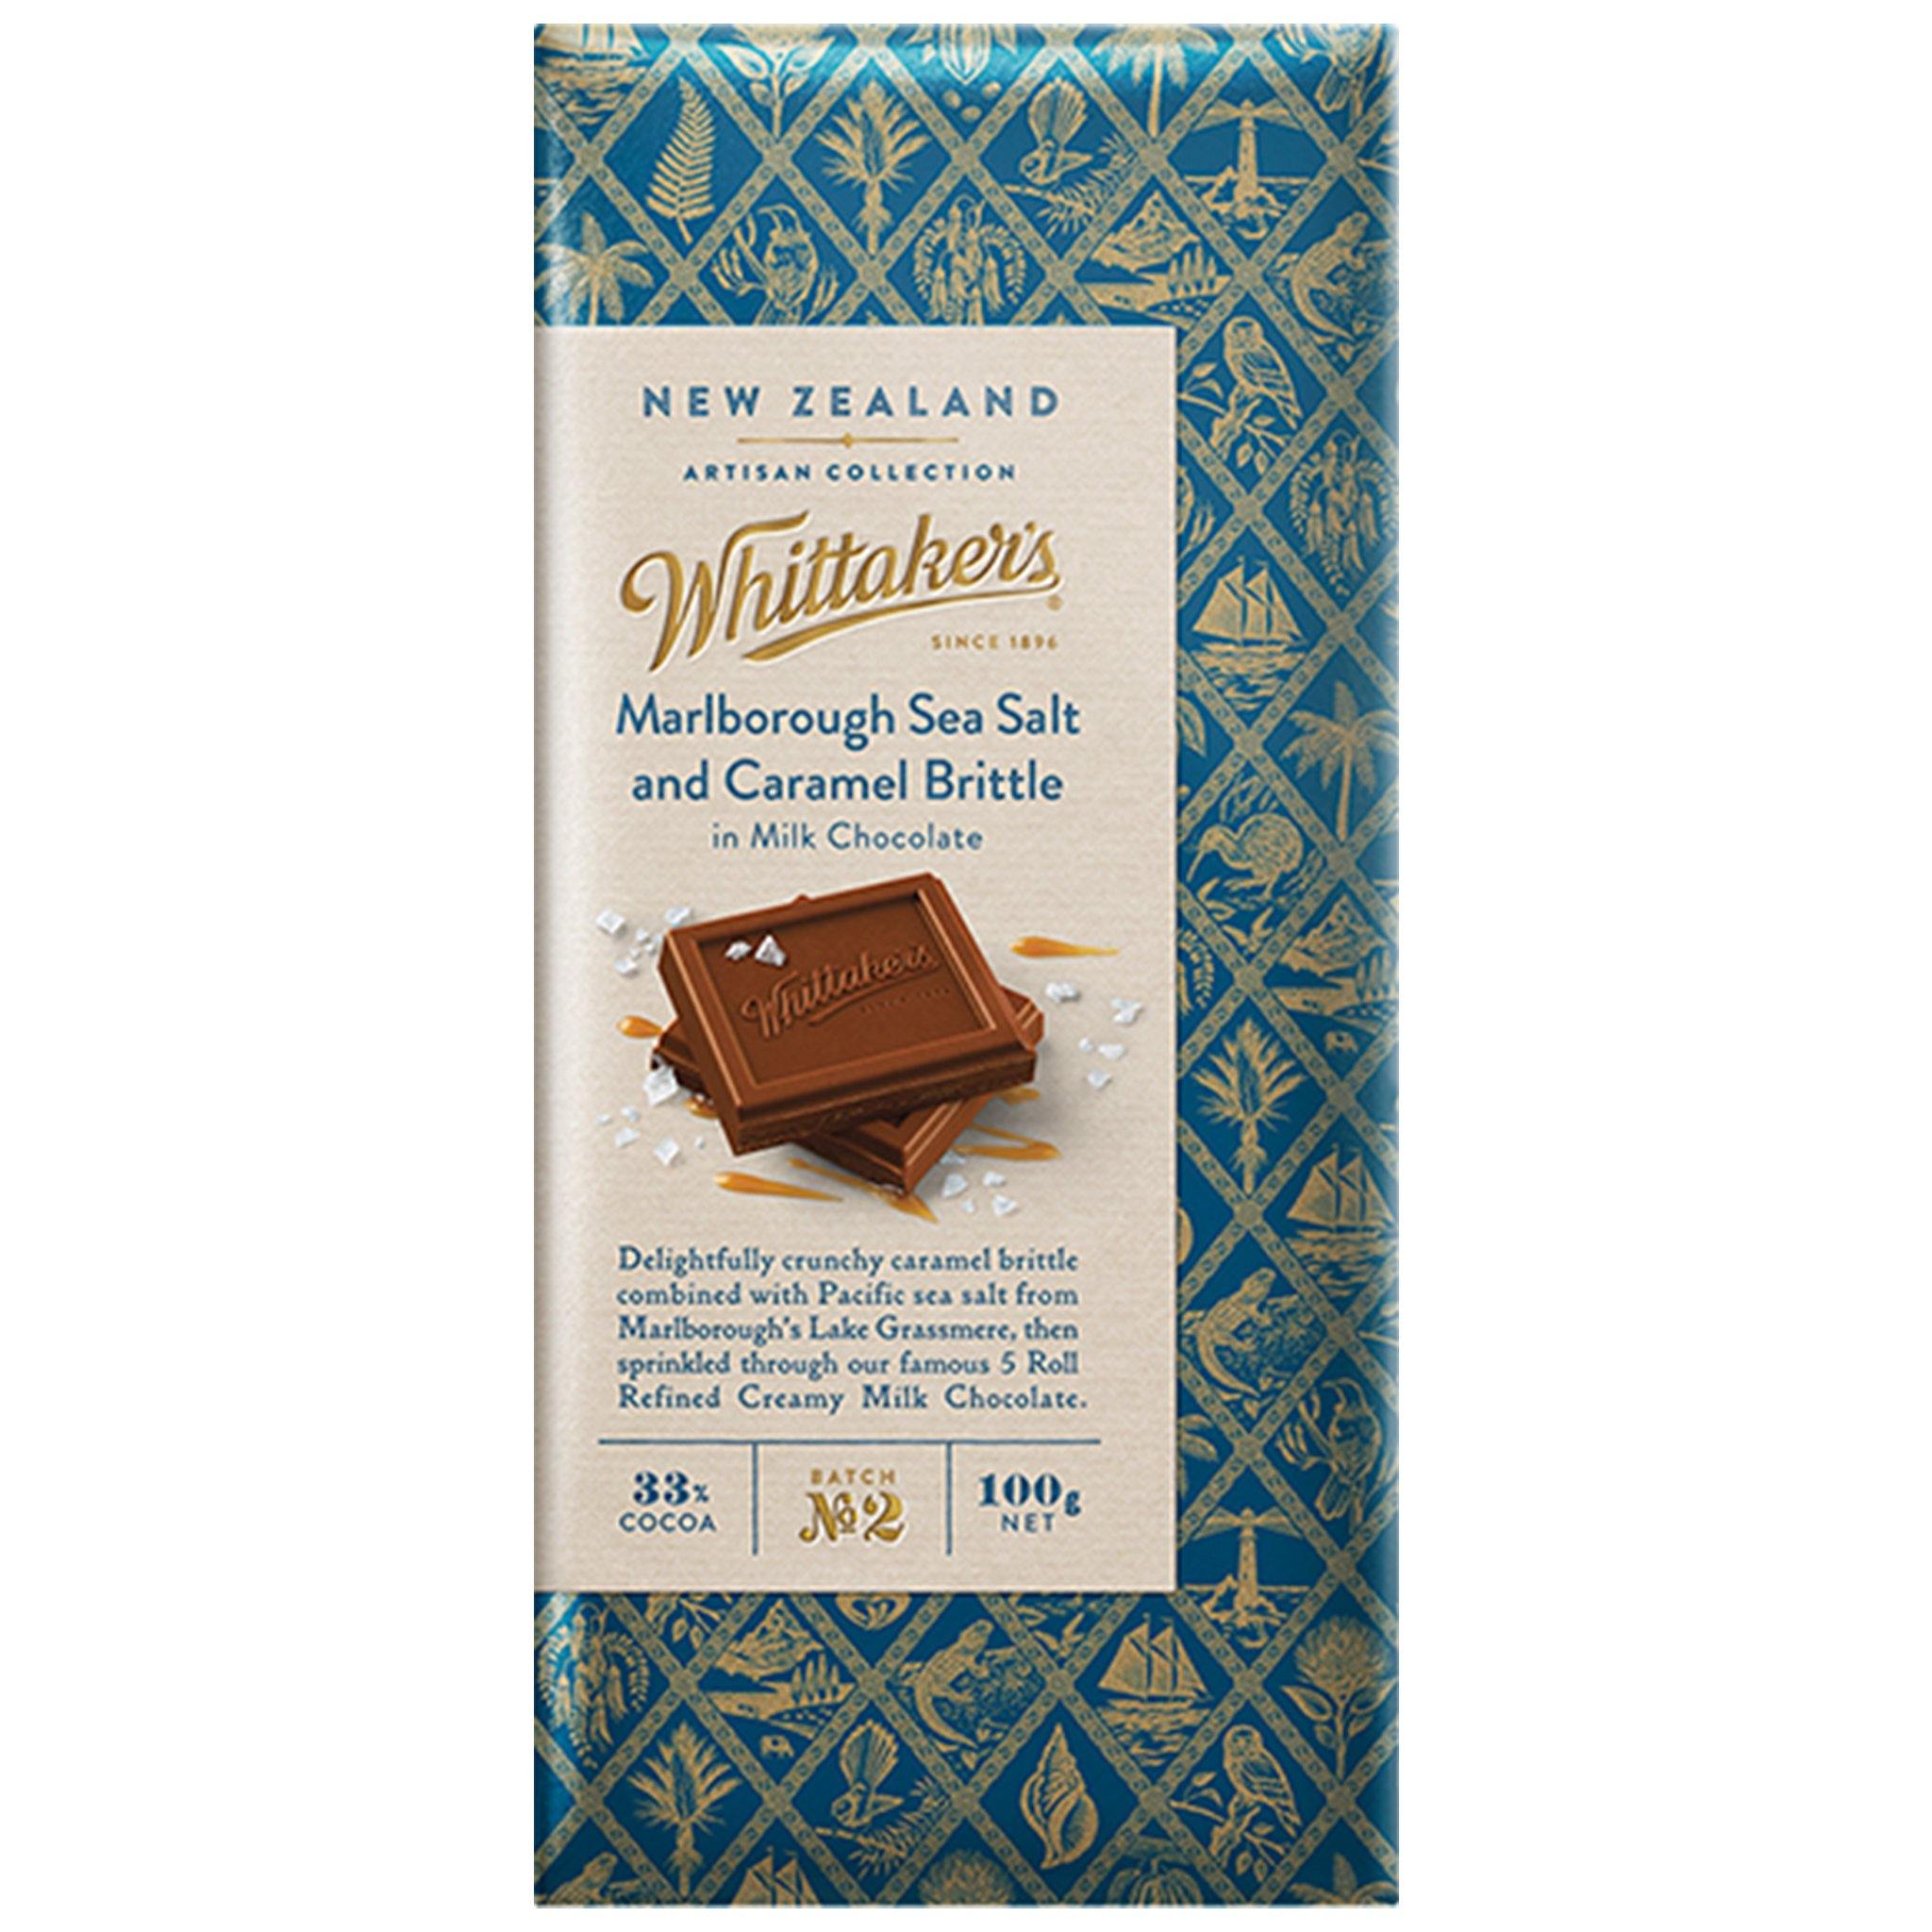 Whittakers Marlborough Sea Salt & Caramel Brittle Milk Chocolate - New Zealand - Sweet Exotics